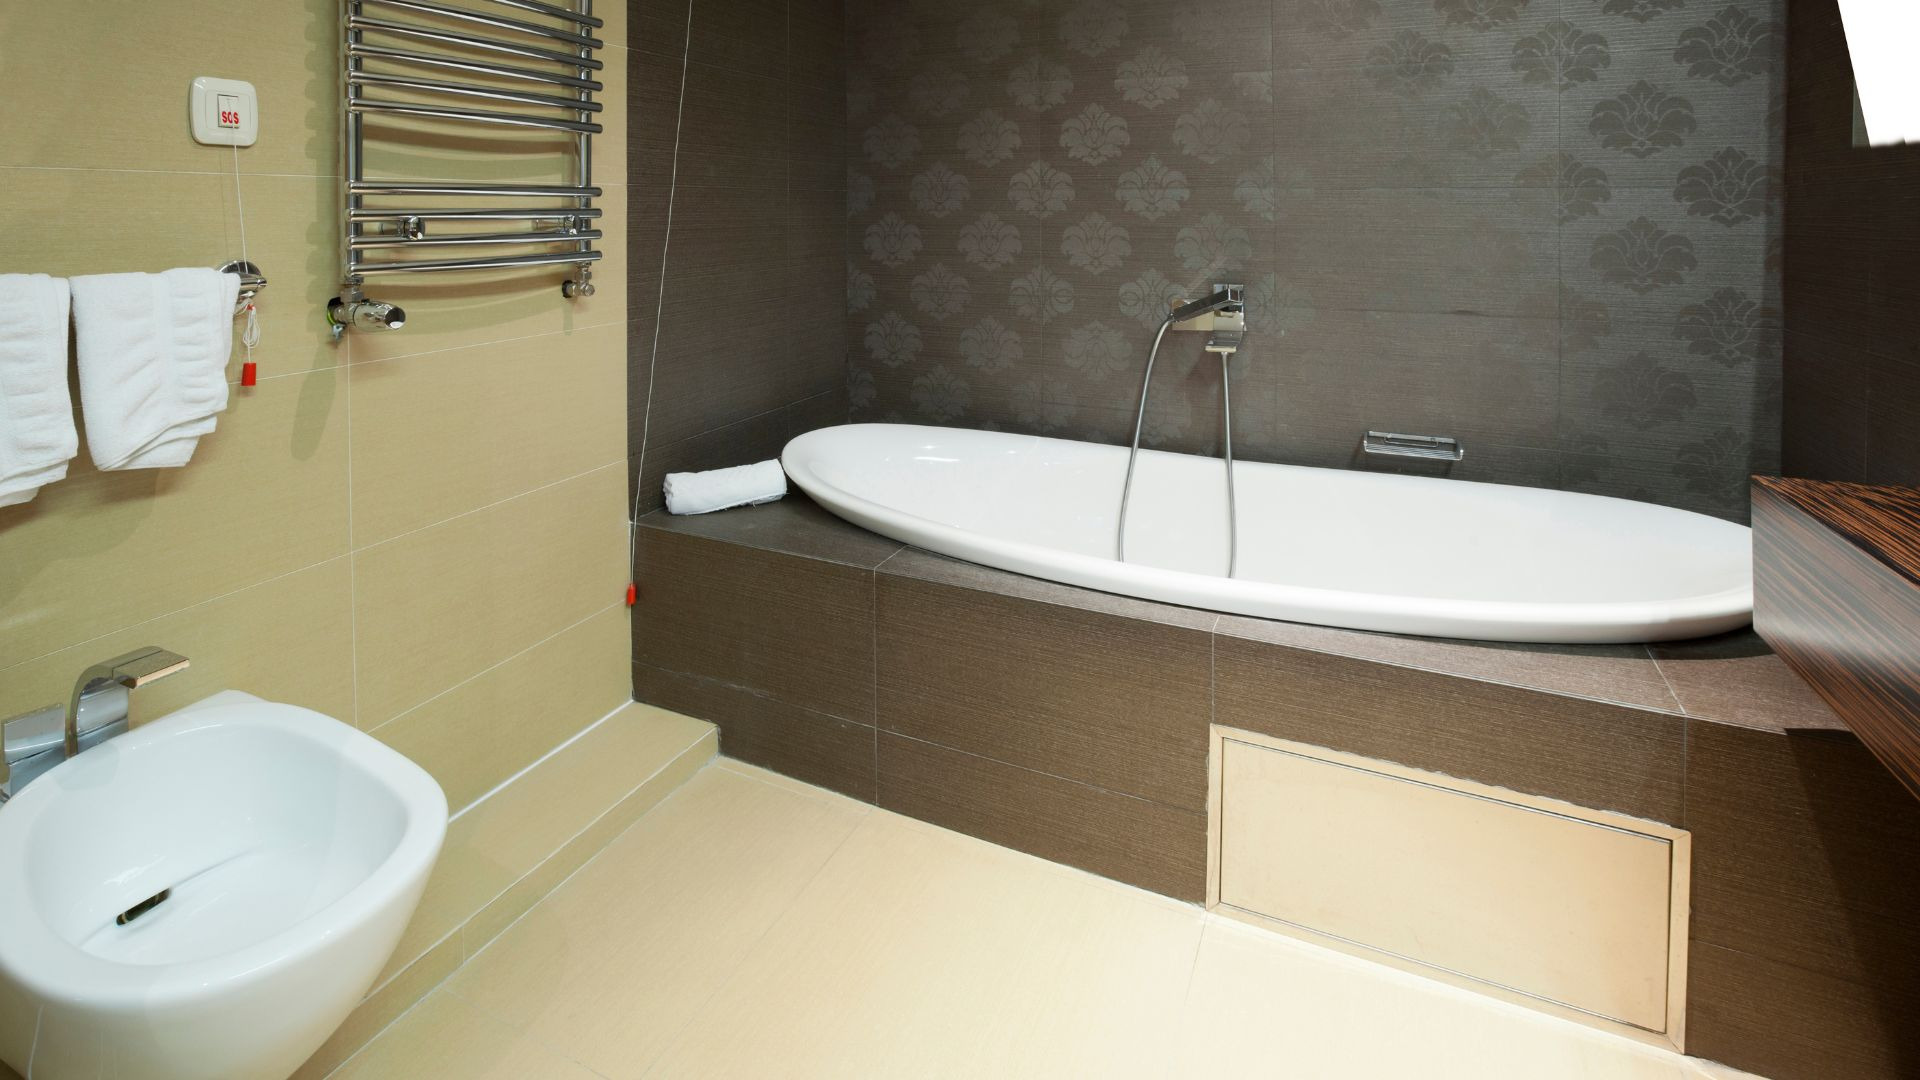 ideas-for-a-dream-bathtub_IDW-Italia-Prague-Biella